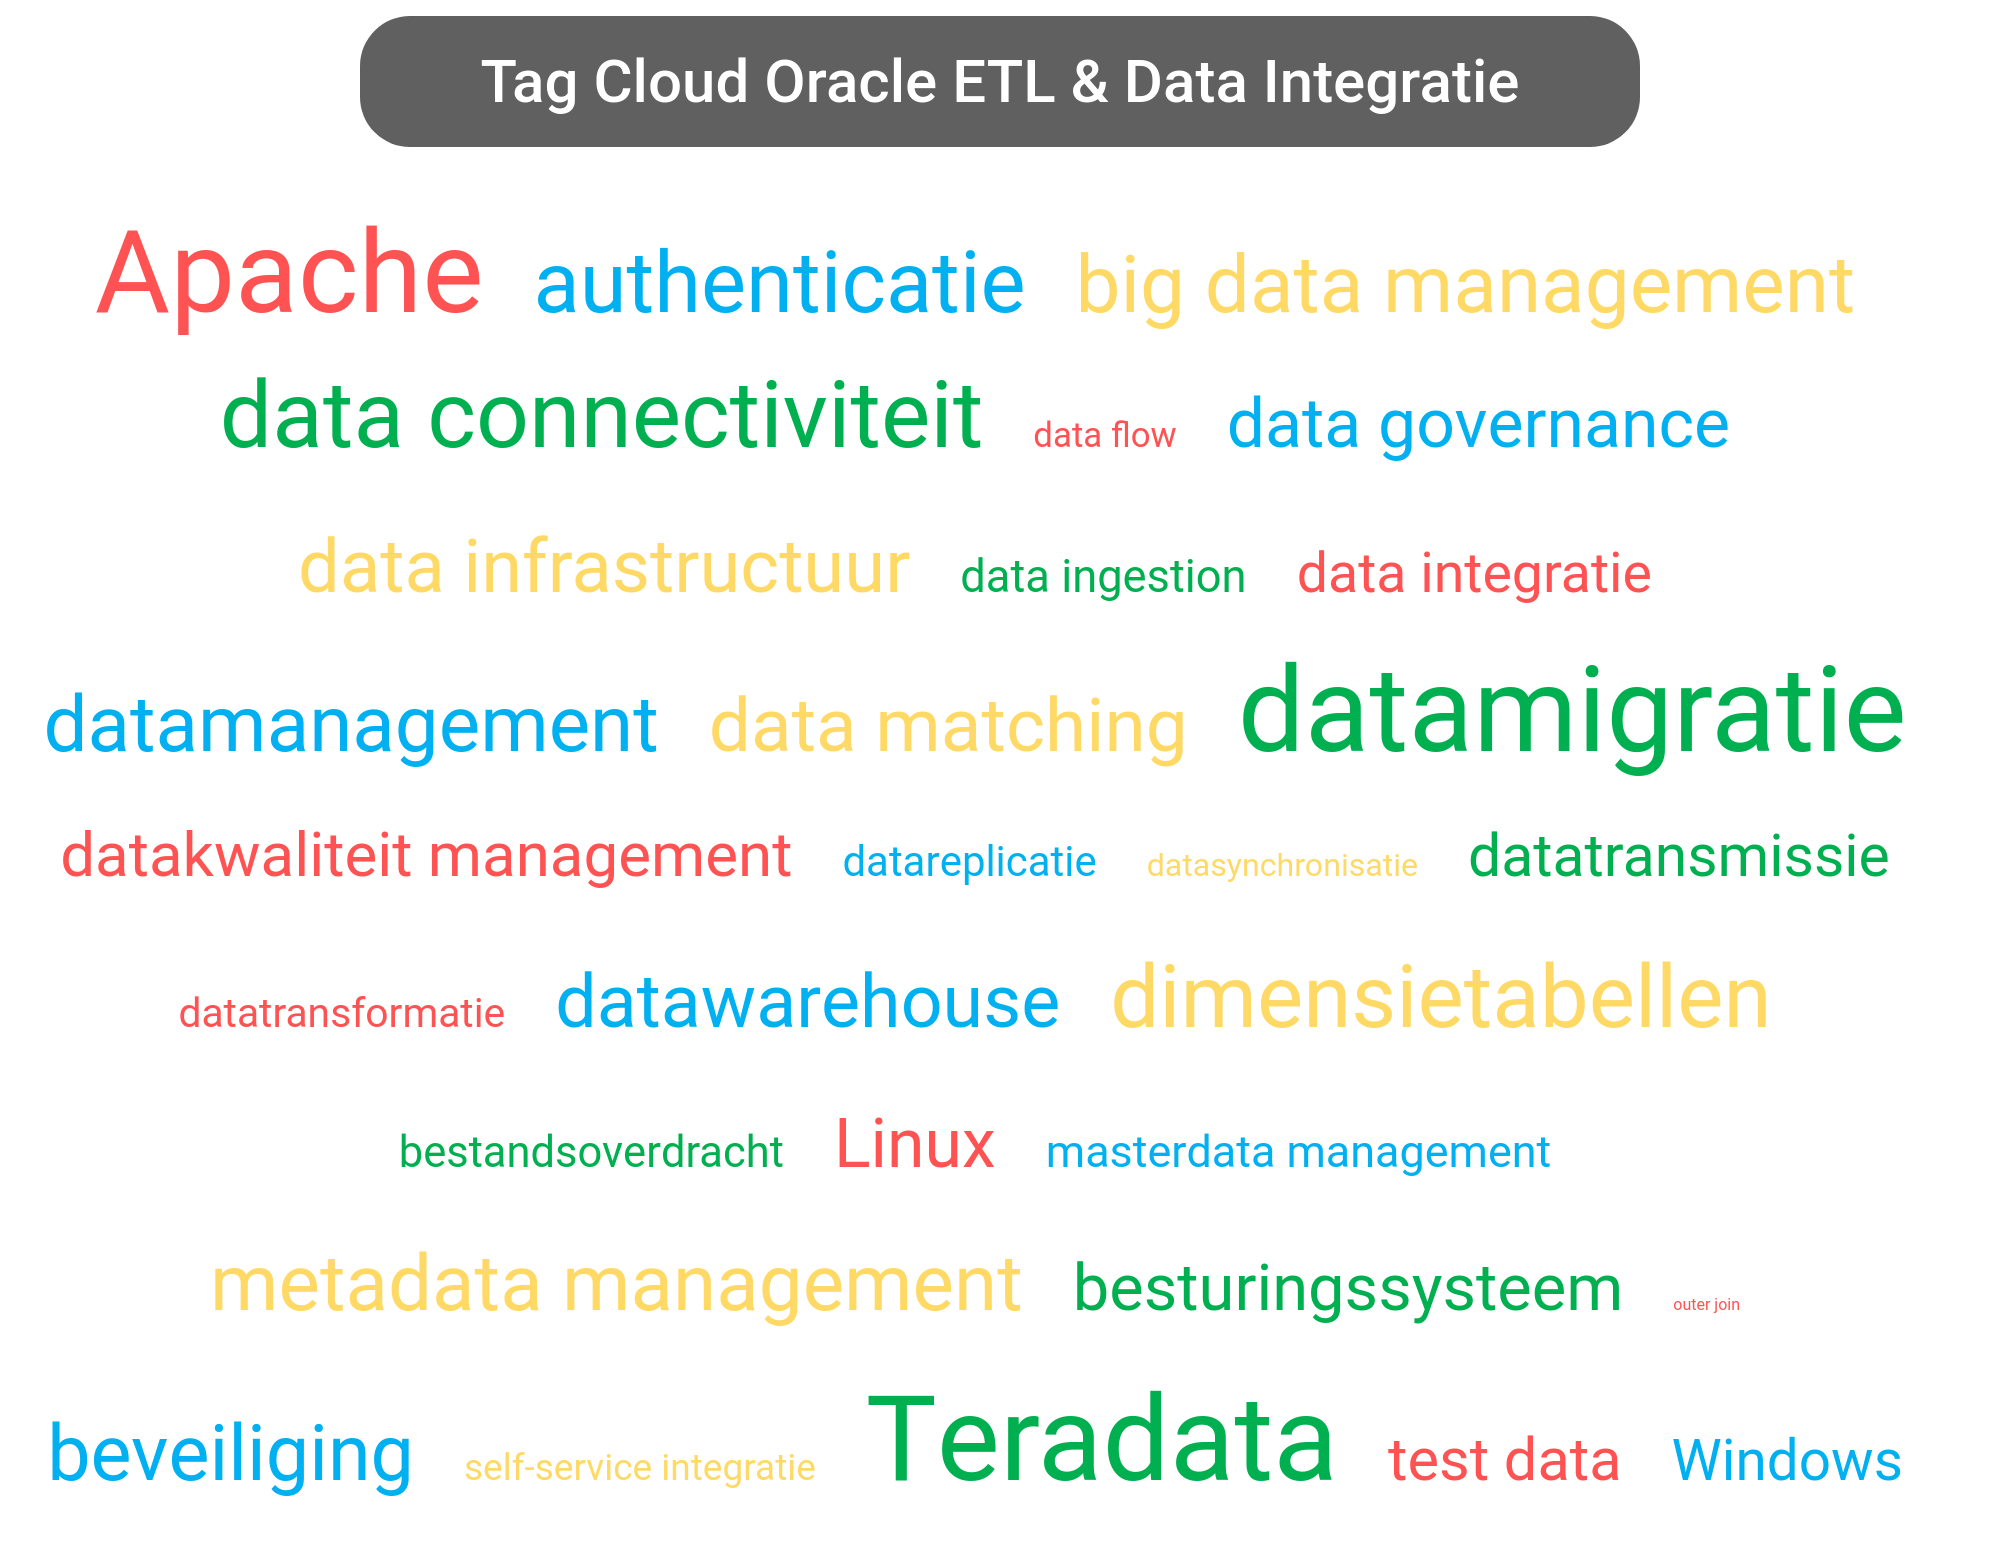 Tag cloud van Oracle Data Integration tools.